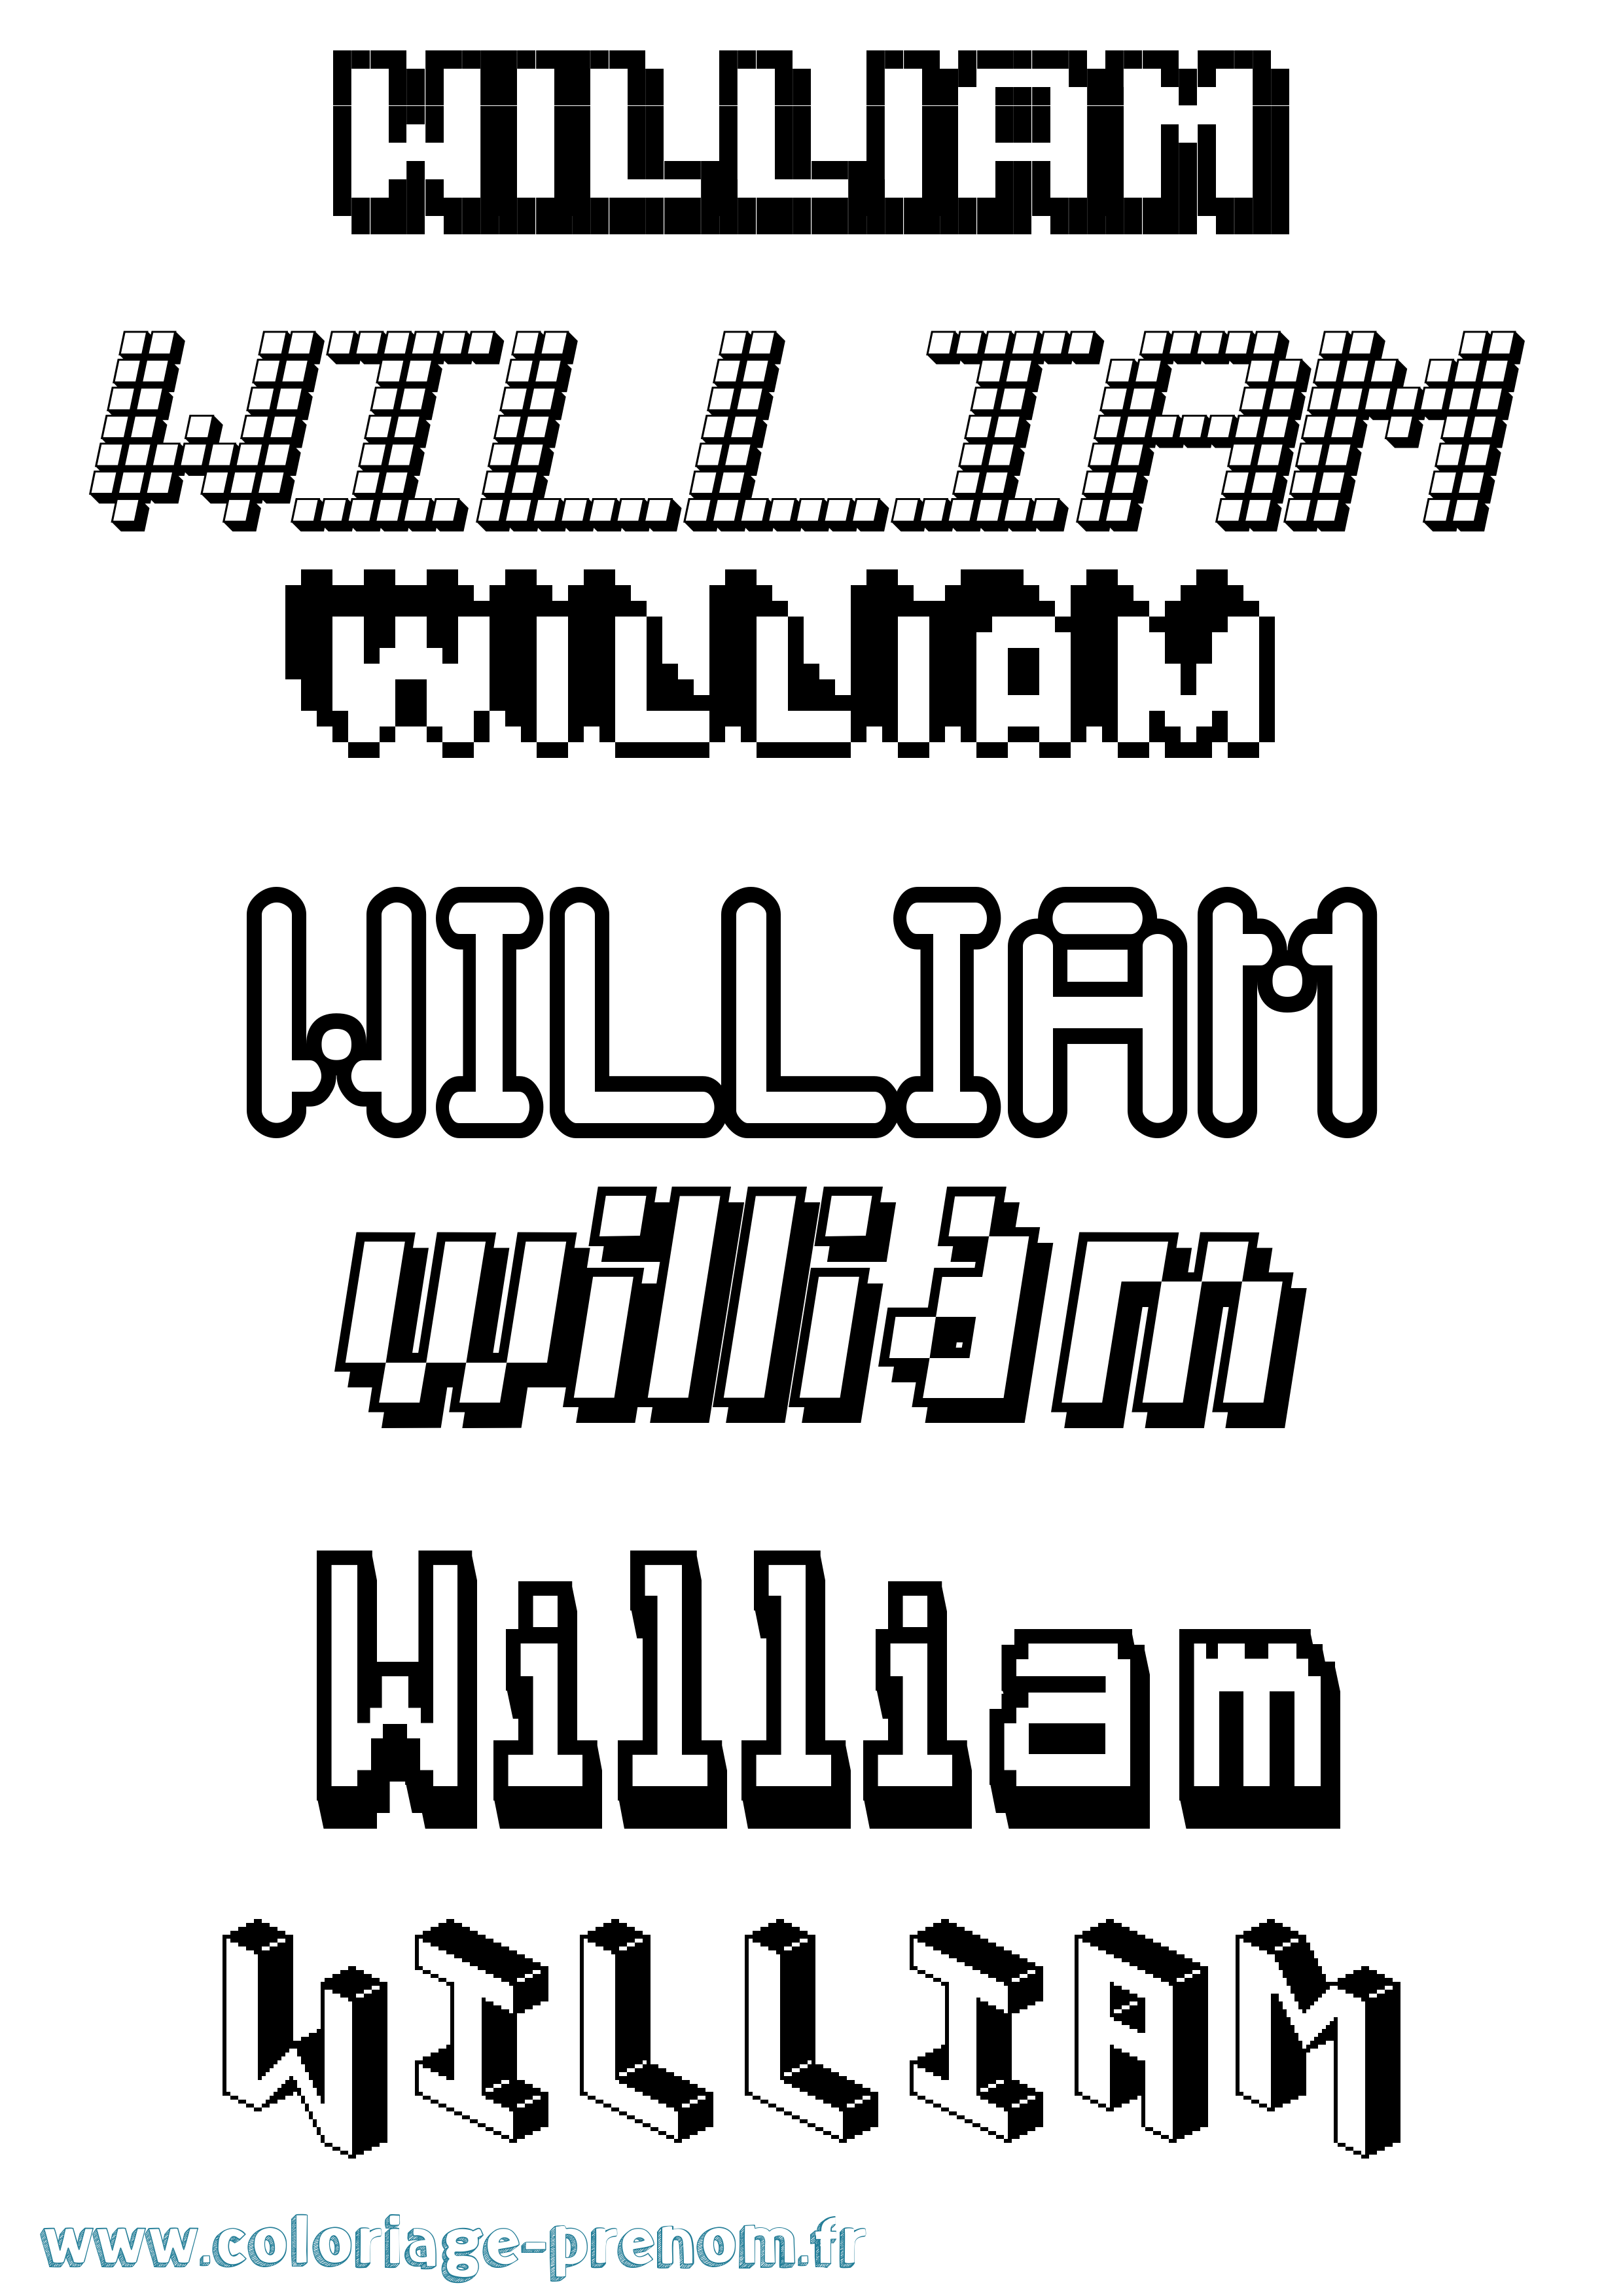 Coloriage prénom William Pixel